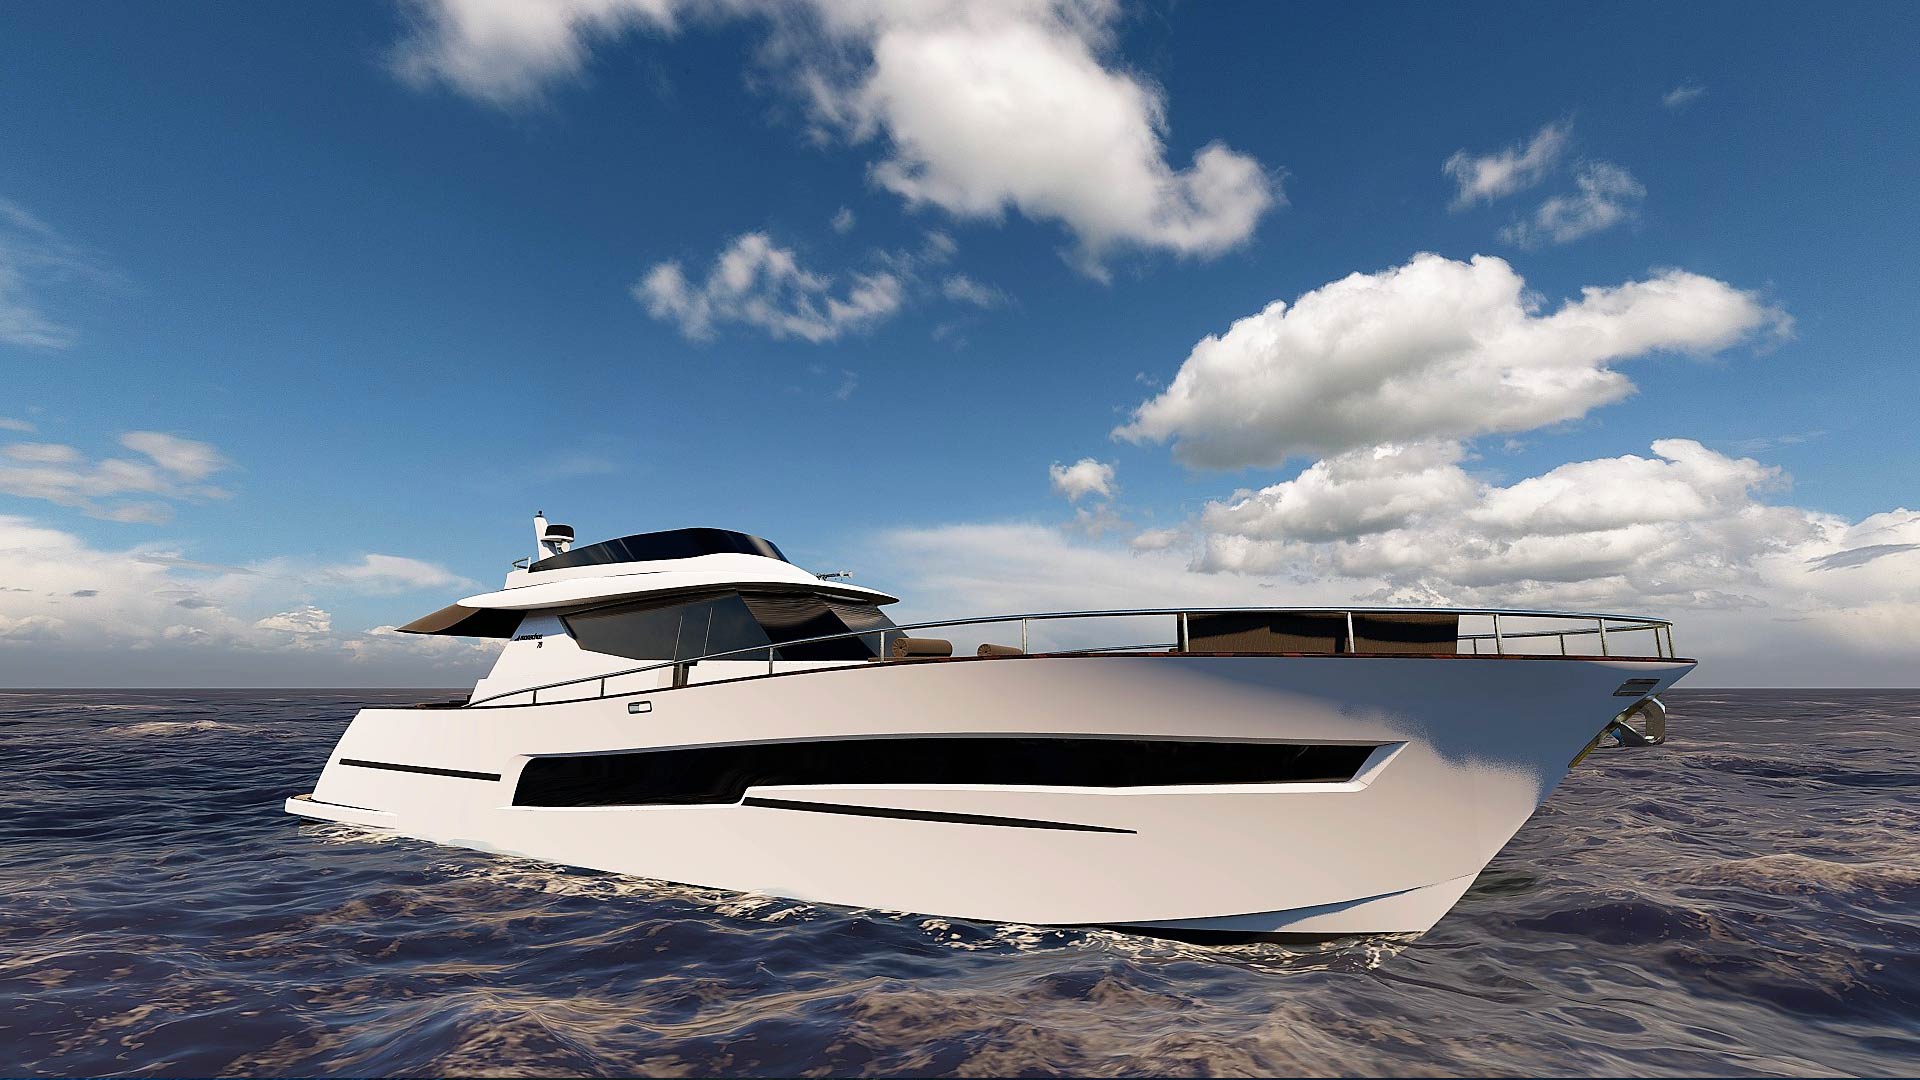 Luxury yacht PANTA REI (rendered image)